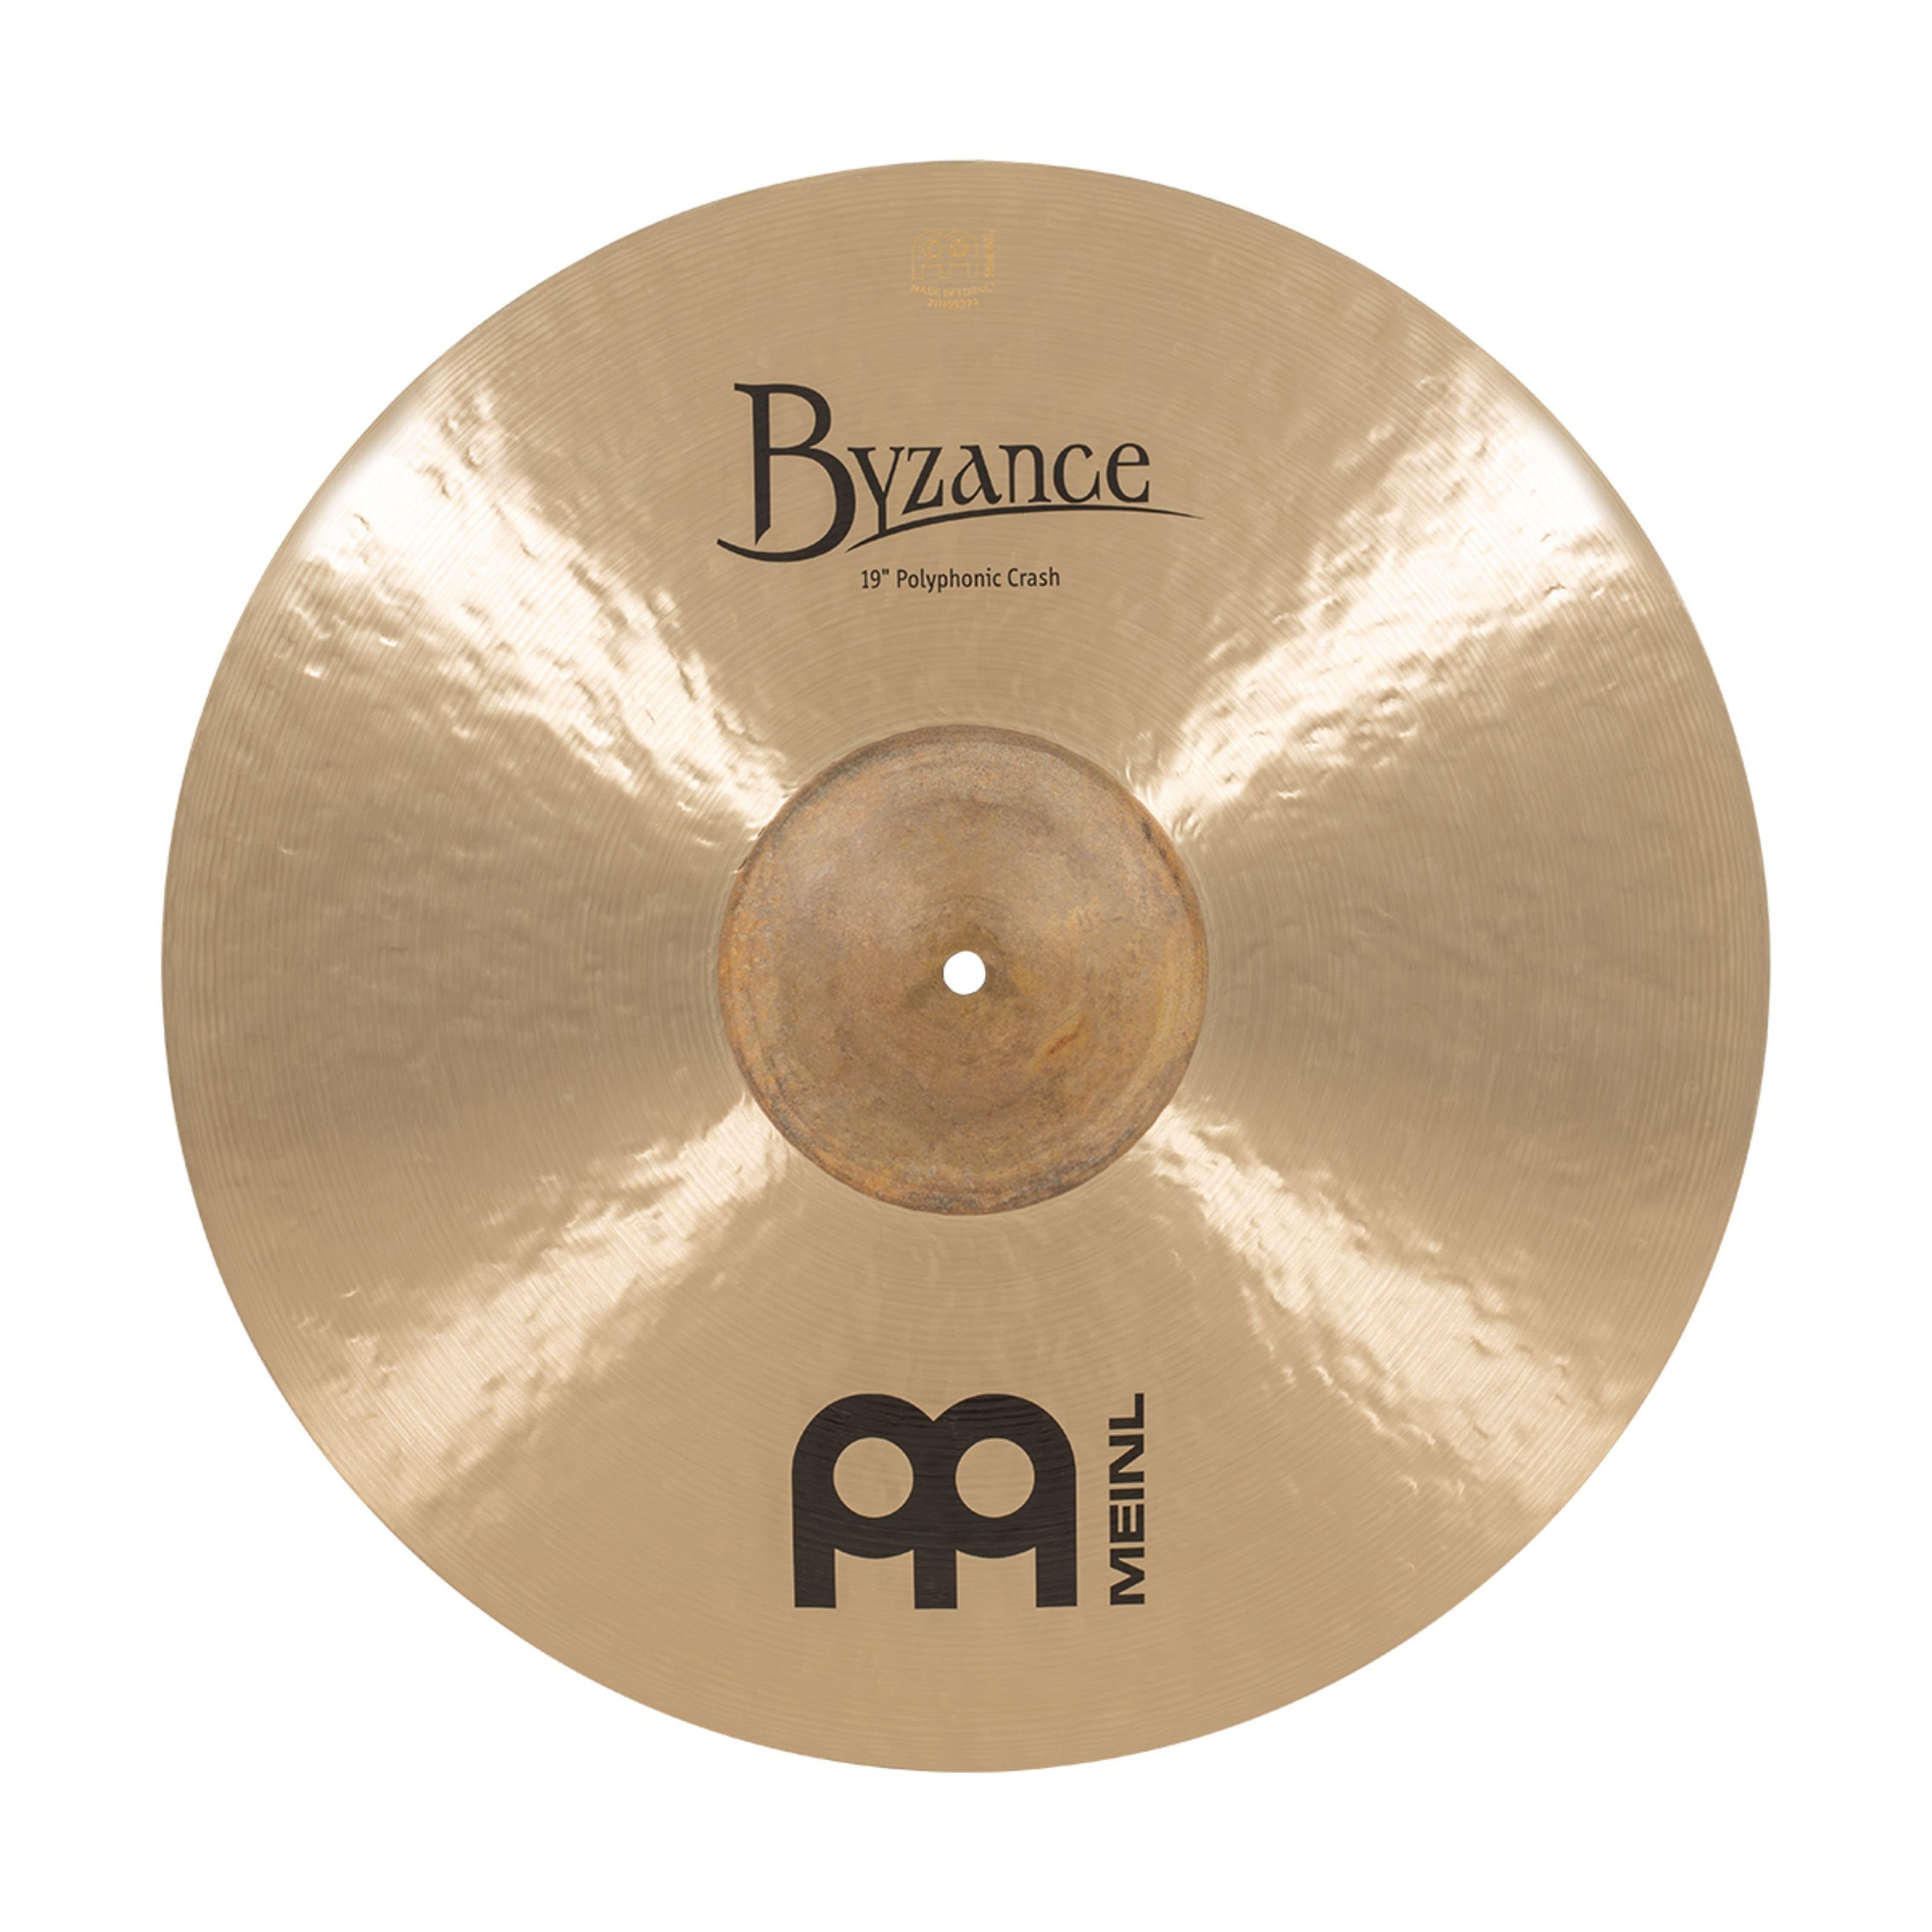 Meinl Percussion Spielzeug-Musikinstrument, B19POC Byzance Polyphonic Crash 19" - Crash Becken